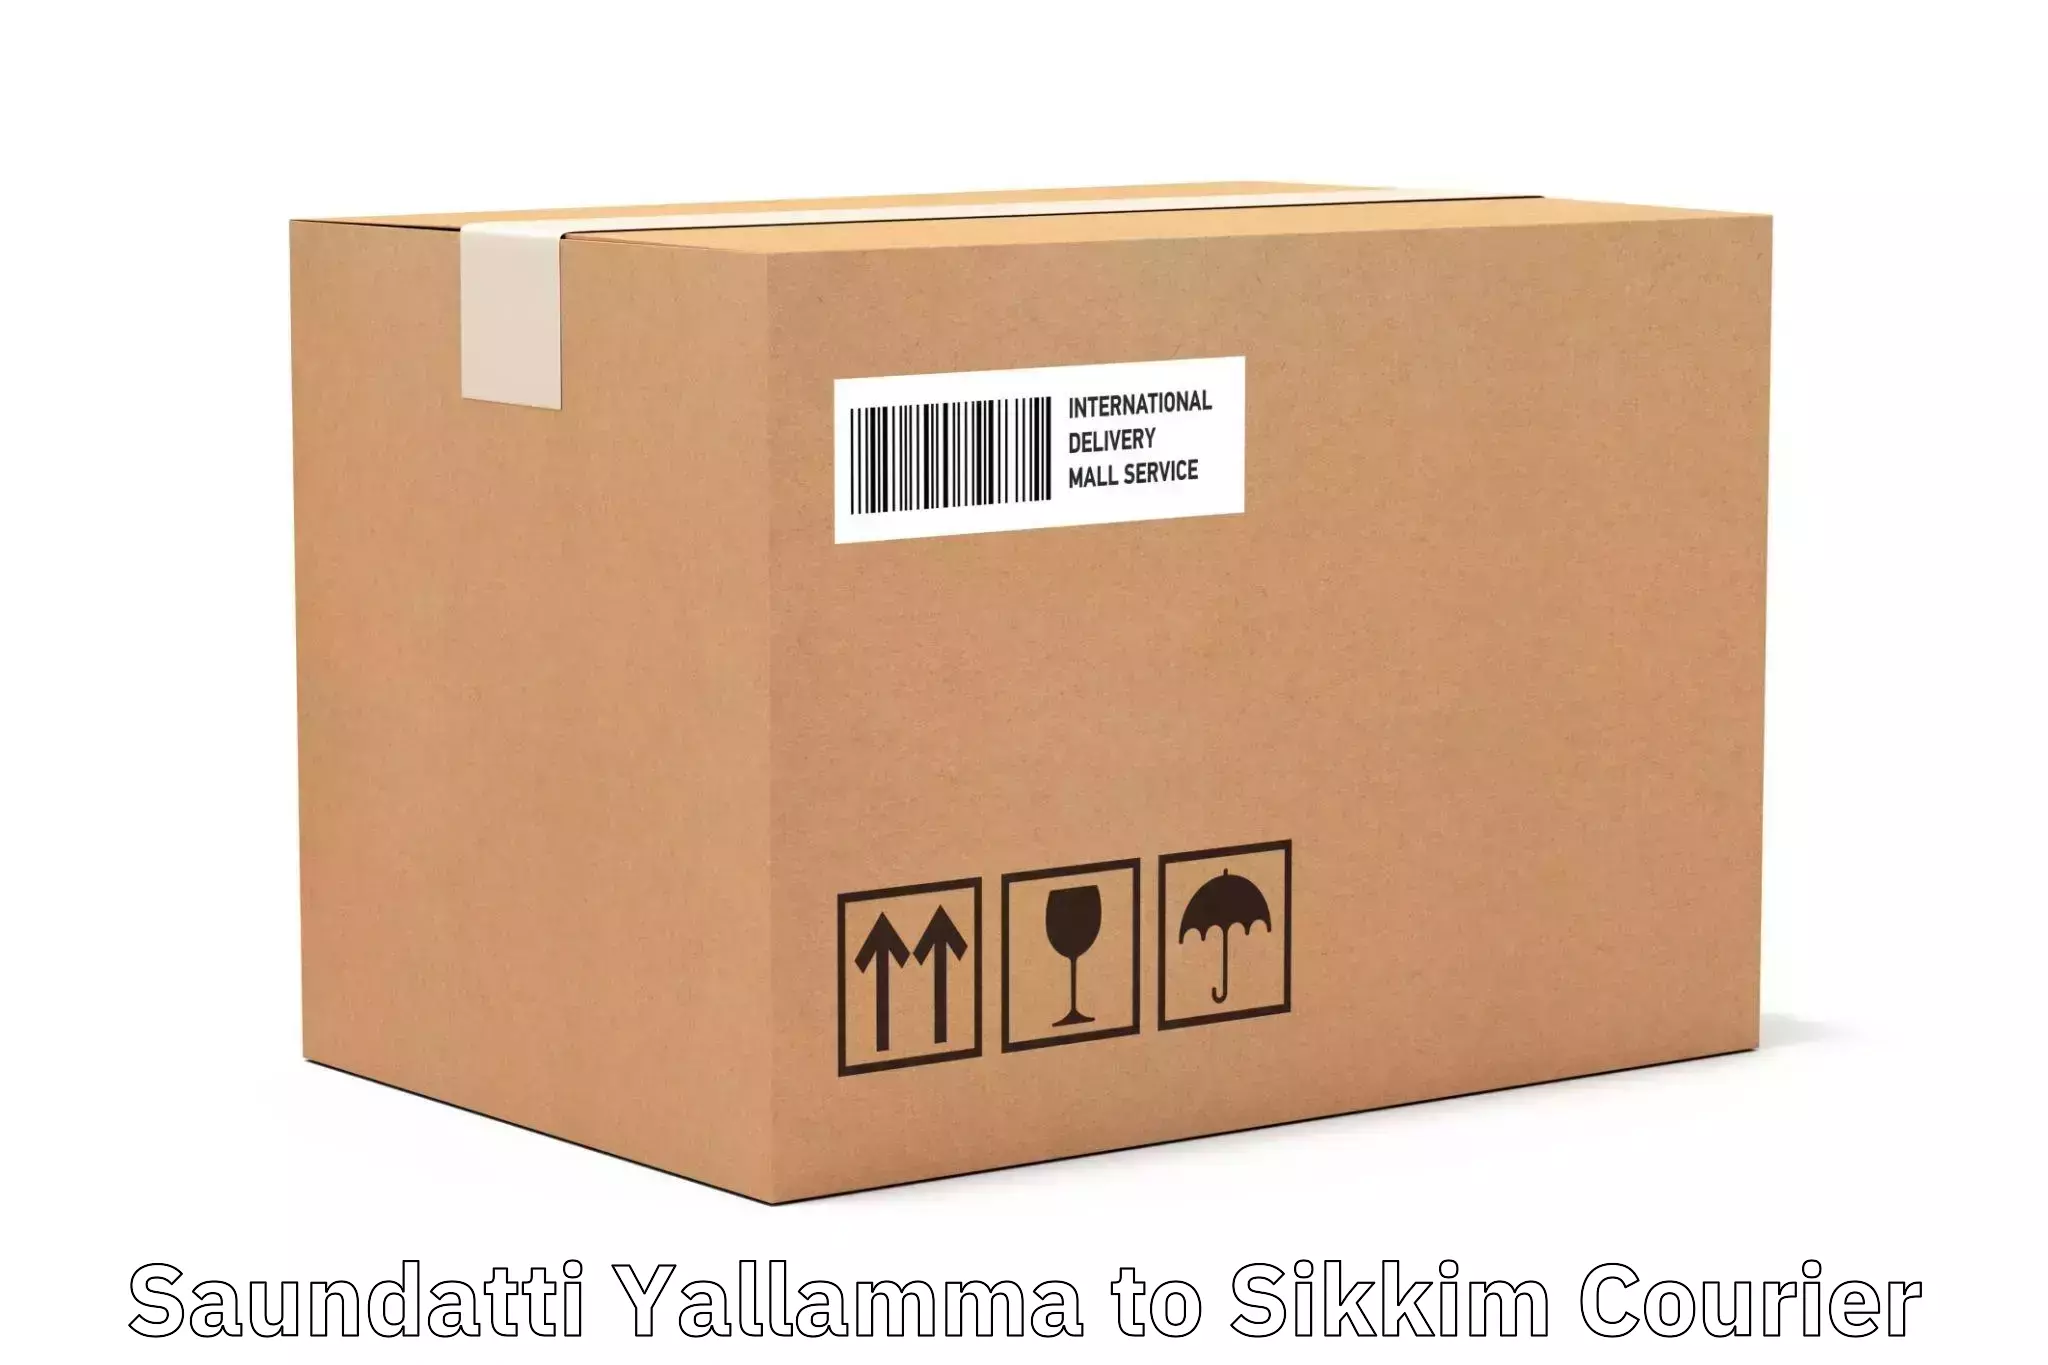 User-friendly delivery service Saundatti Yallamma to Mangan